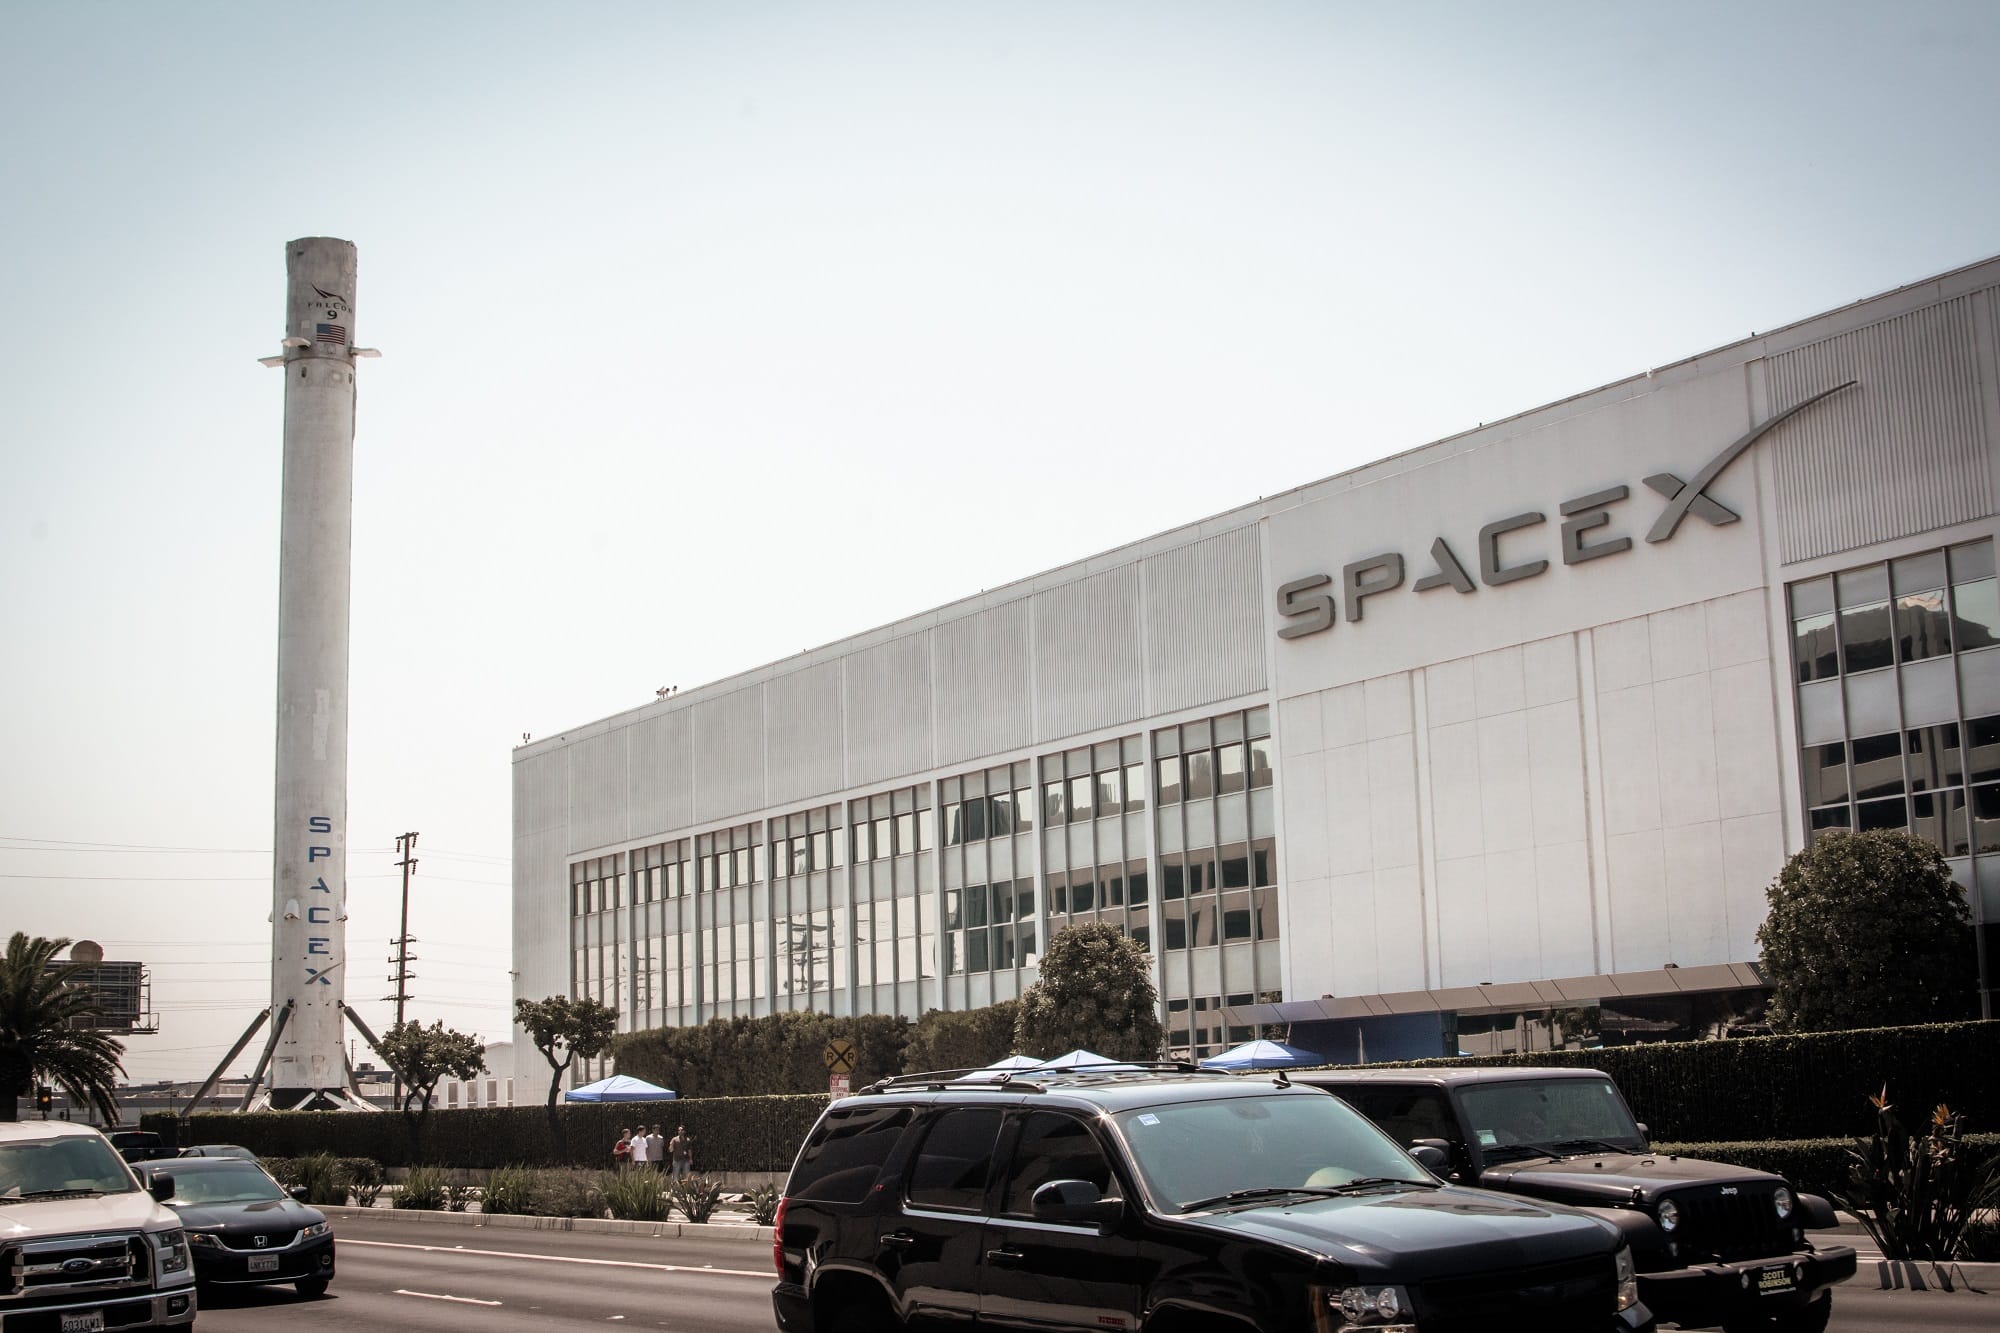 SpaceX's headquarters in Hawthorne, California. ©KC Grim